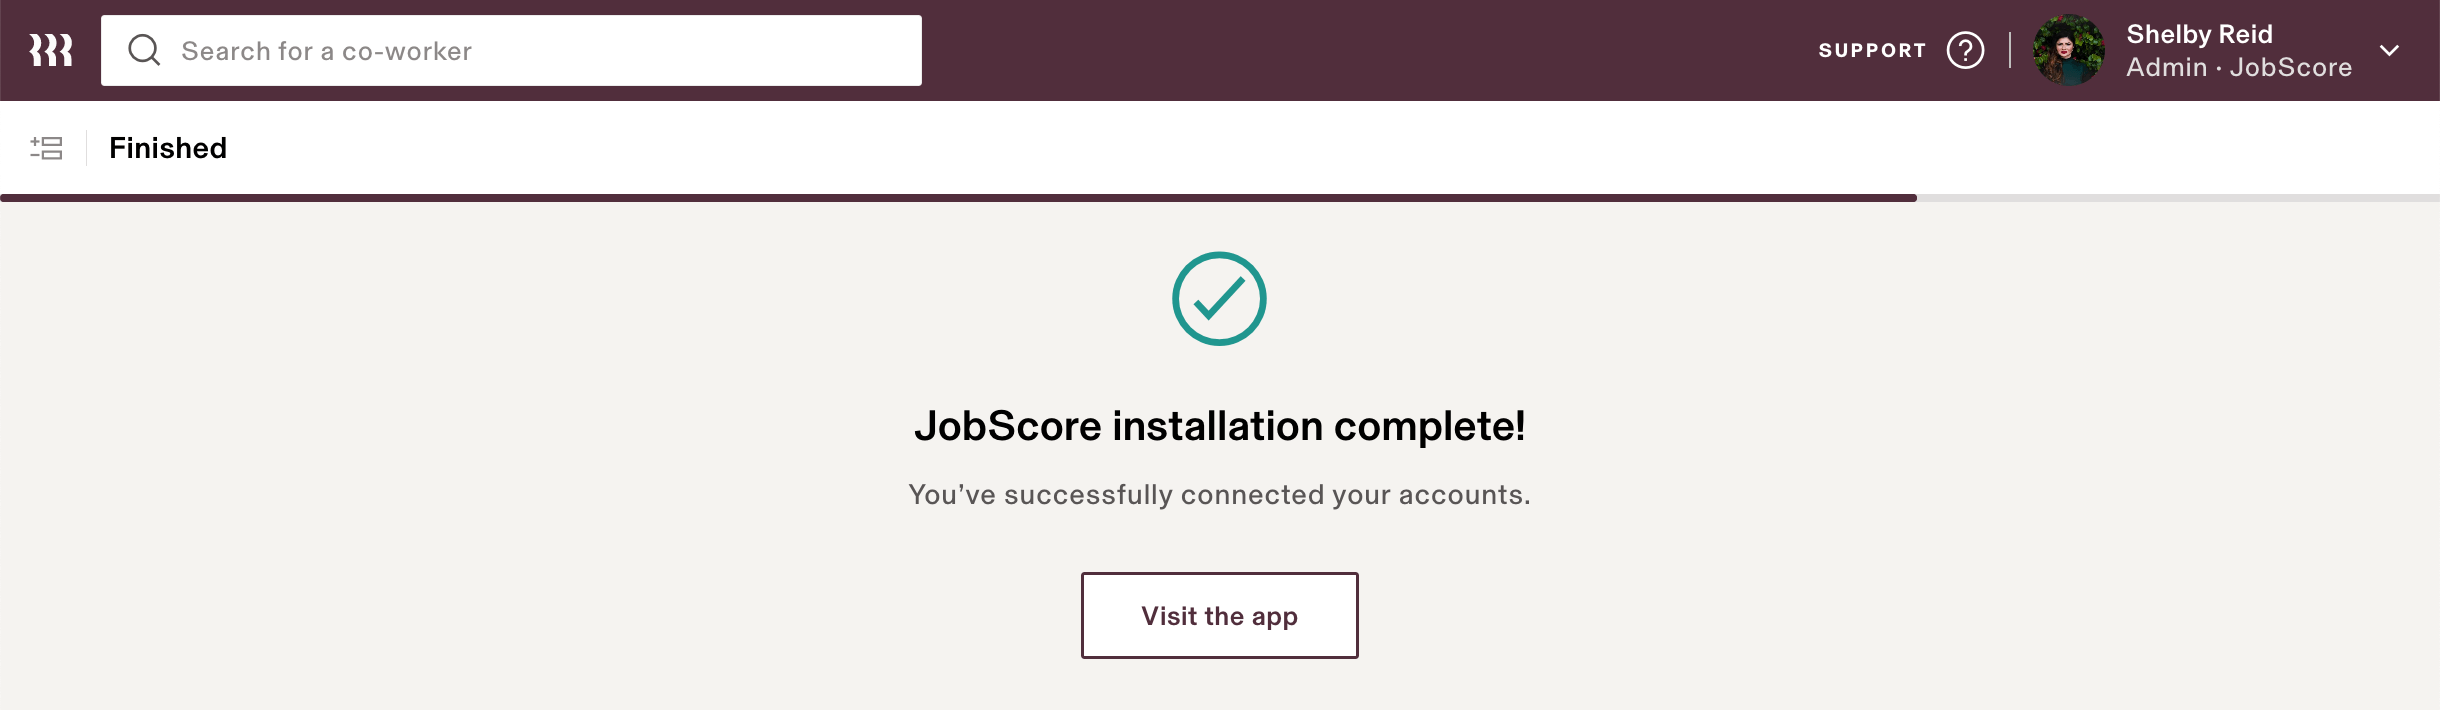 Jobscore_Installation_complete.png